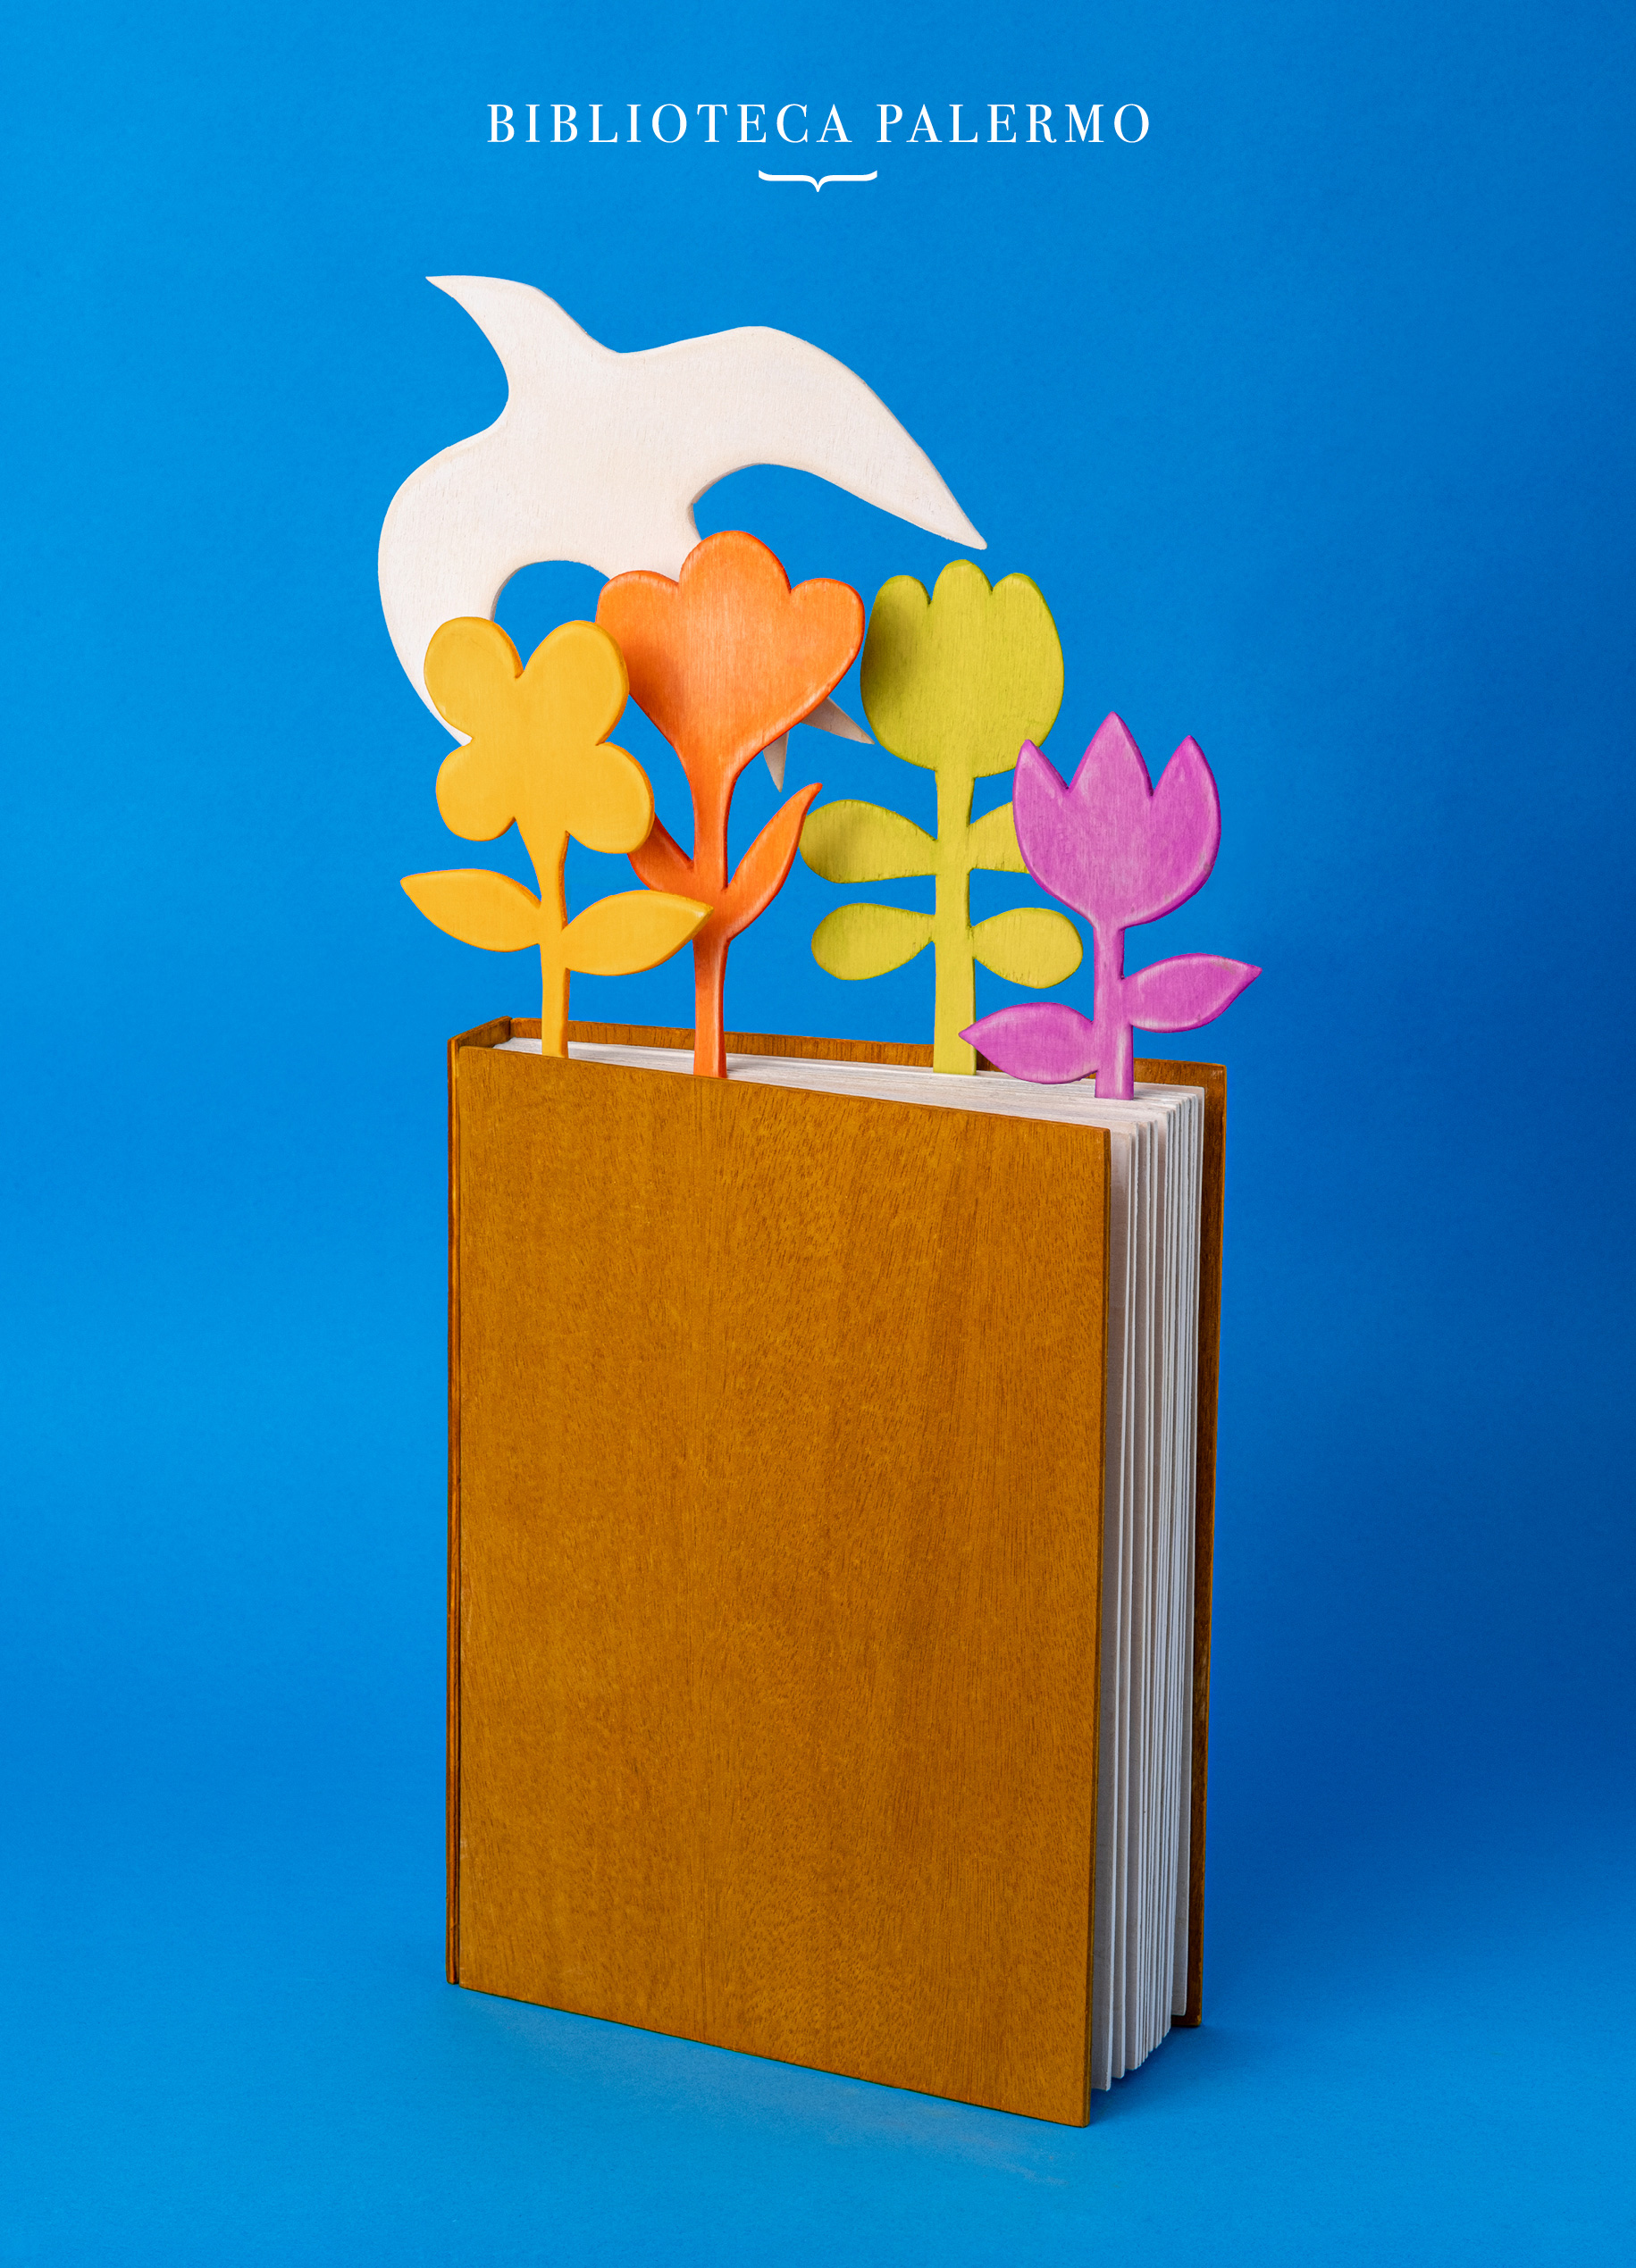 Biblioteca Palemo 'Libro florido' by Estudio Pep Carrió - Creative Work